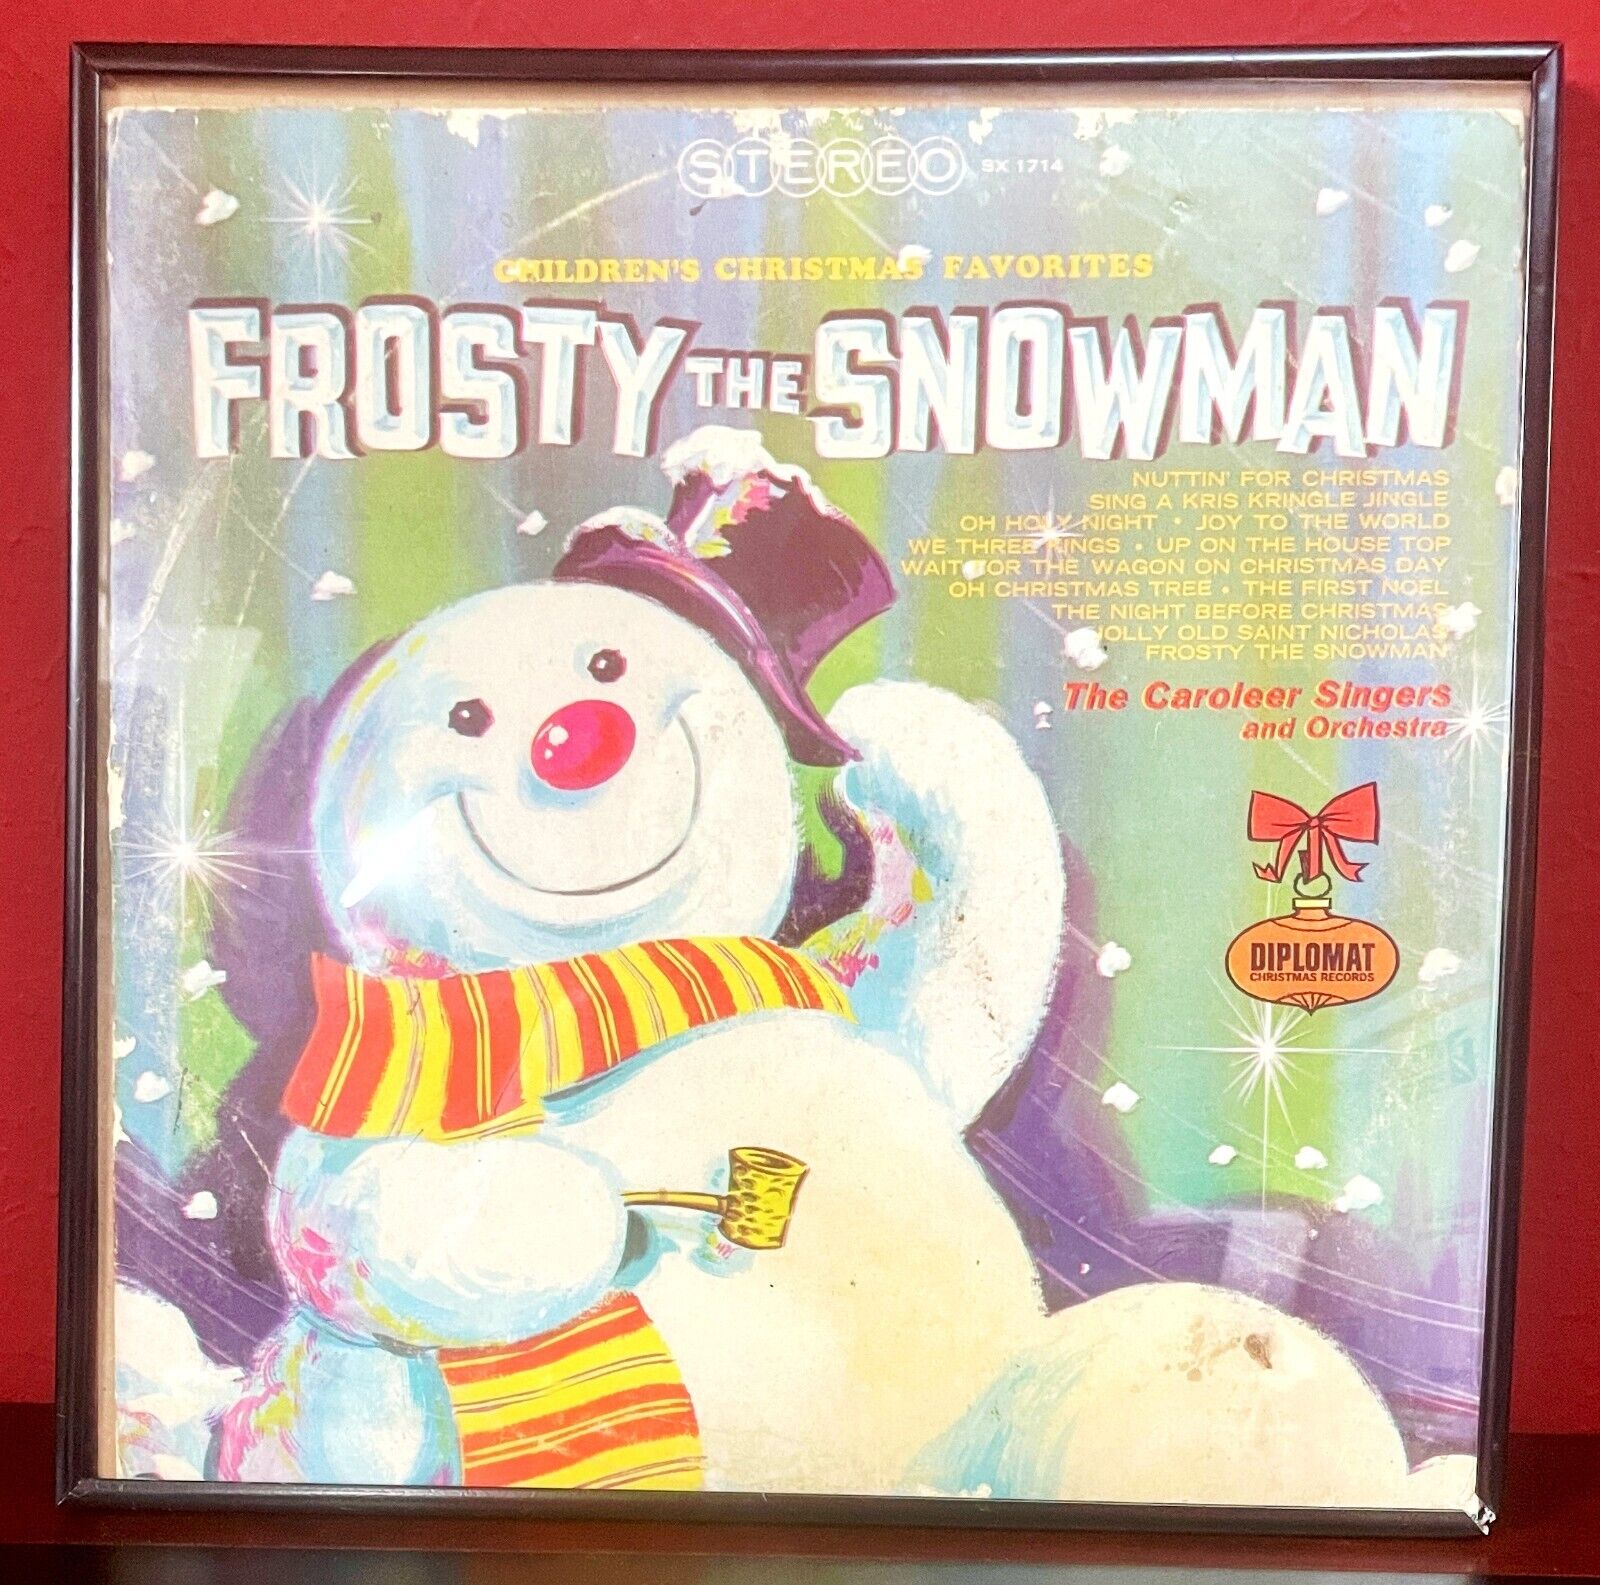 FROSTY THE SNOWMAN LP Vintage 1966 Christmas Album FRAMED THE CAROLEER SINGERS